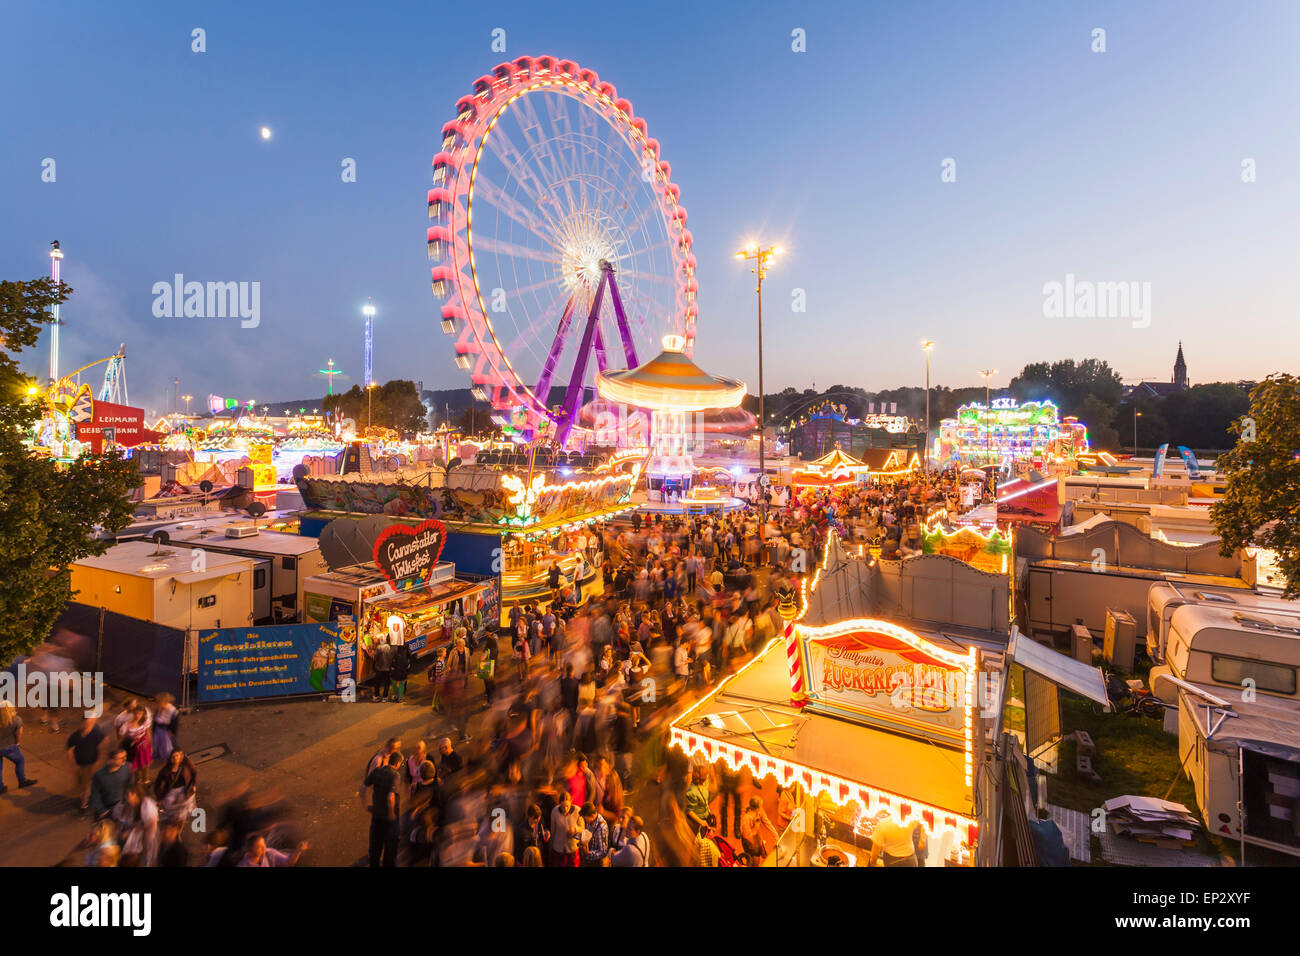 Germania, Stoccarda, Cannstatter Wasen fiera di notte Foto Stock